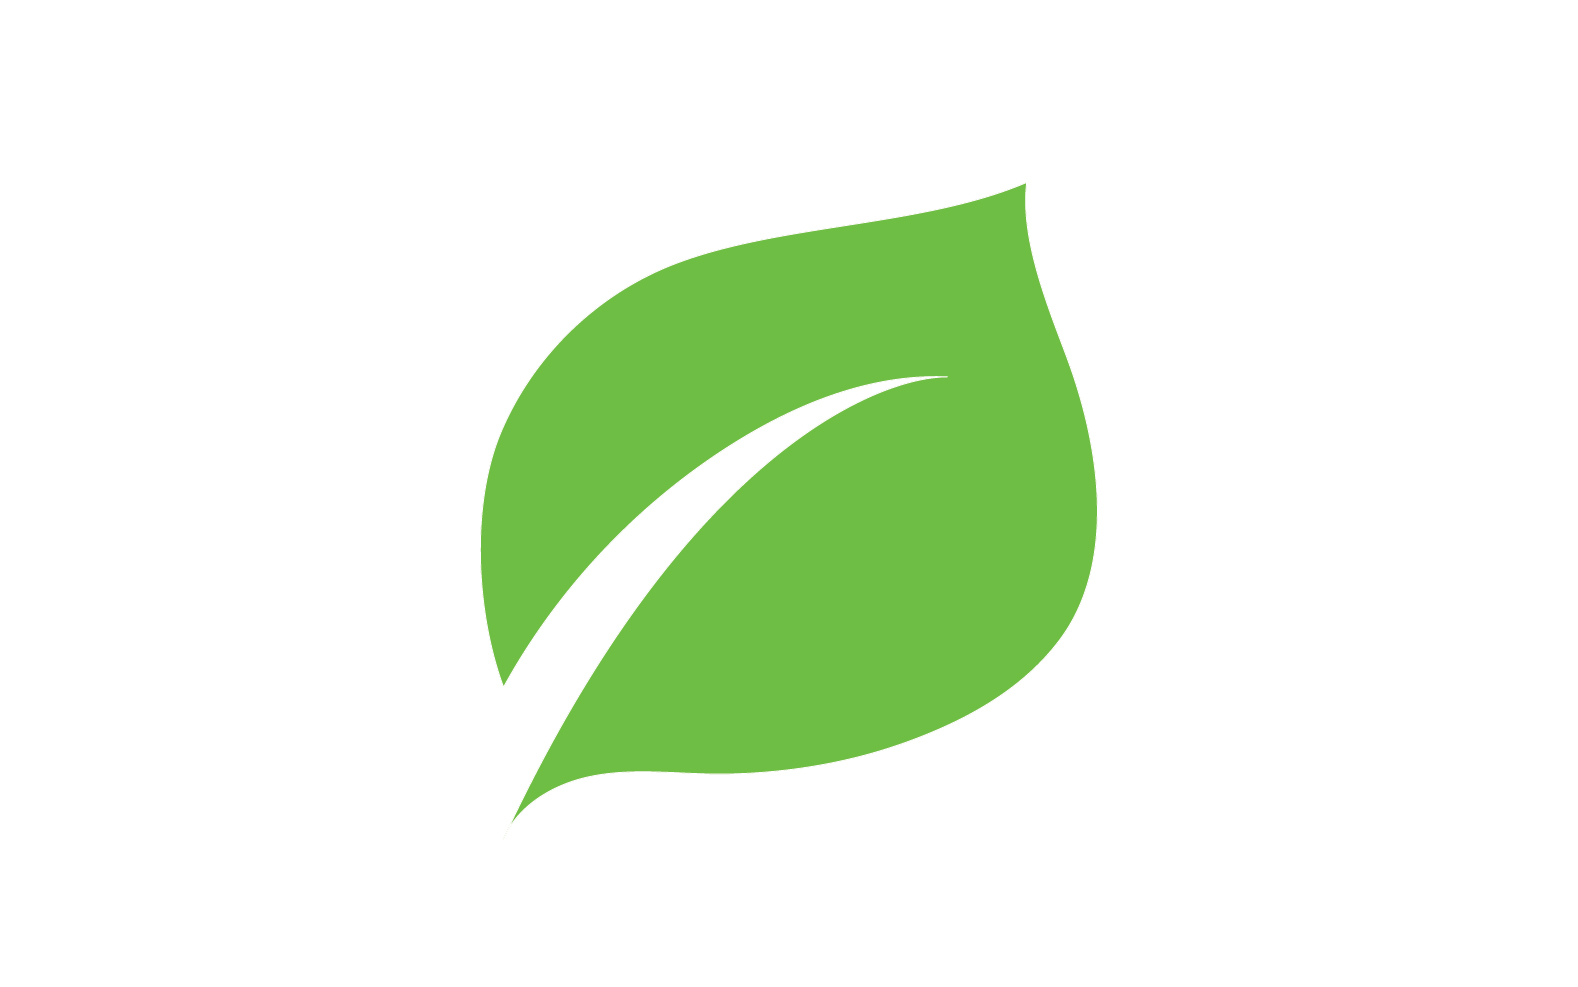 Leaf eco green tea nature fresh logo vector v9